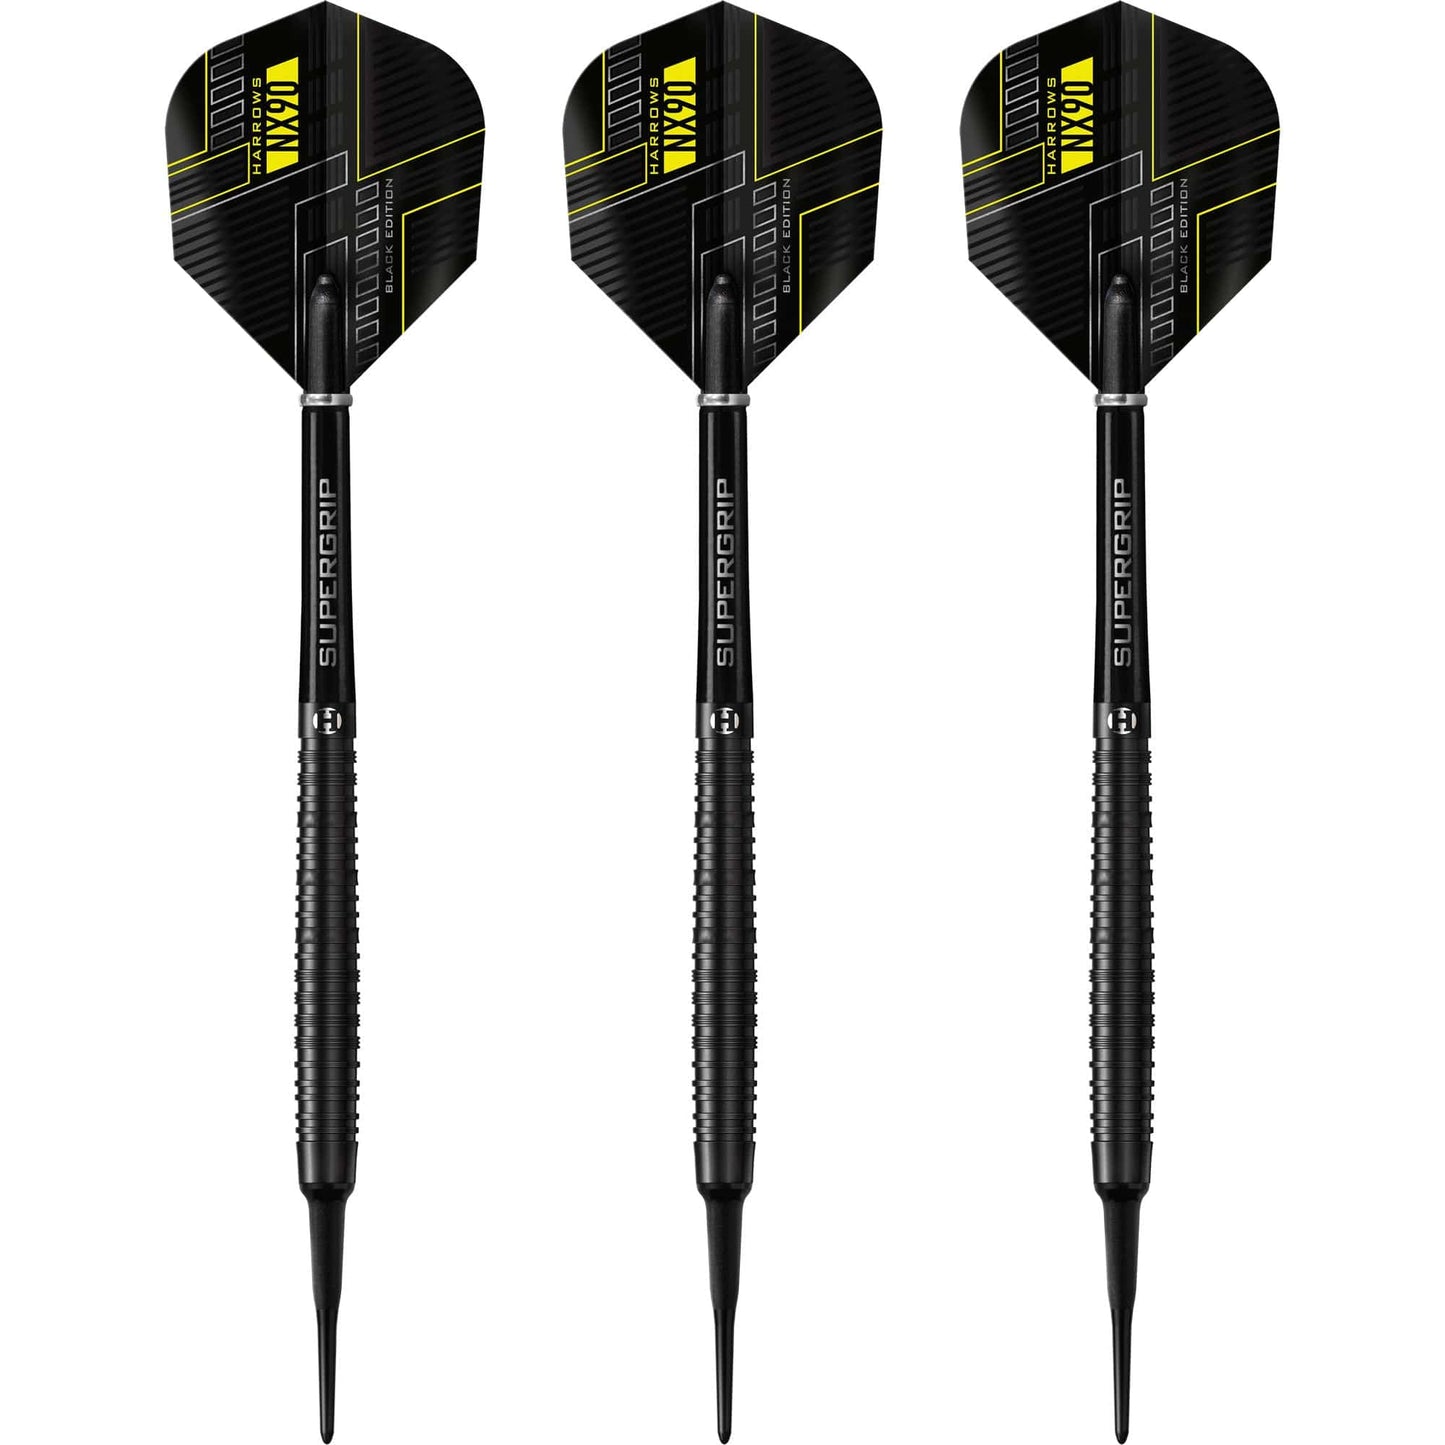 Harrows NX90 Black Darts - Soft Tip - Ringed - 18g